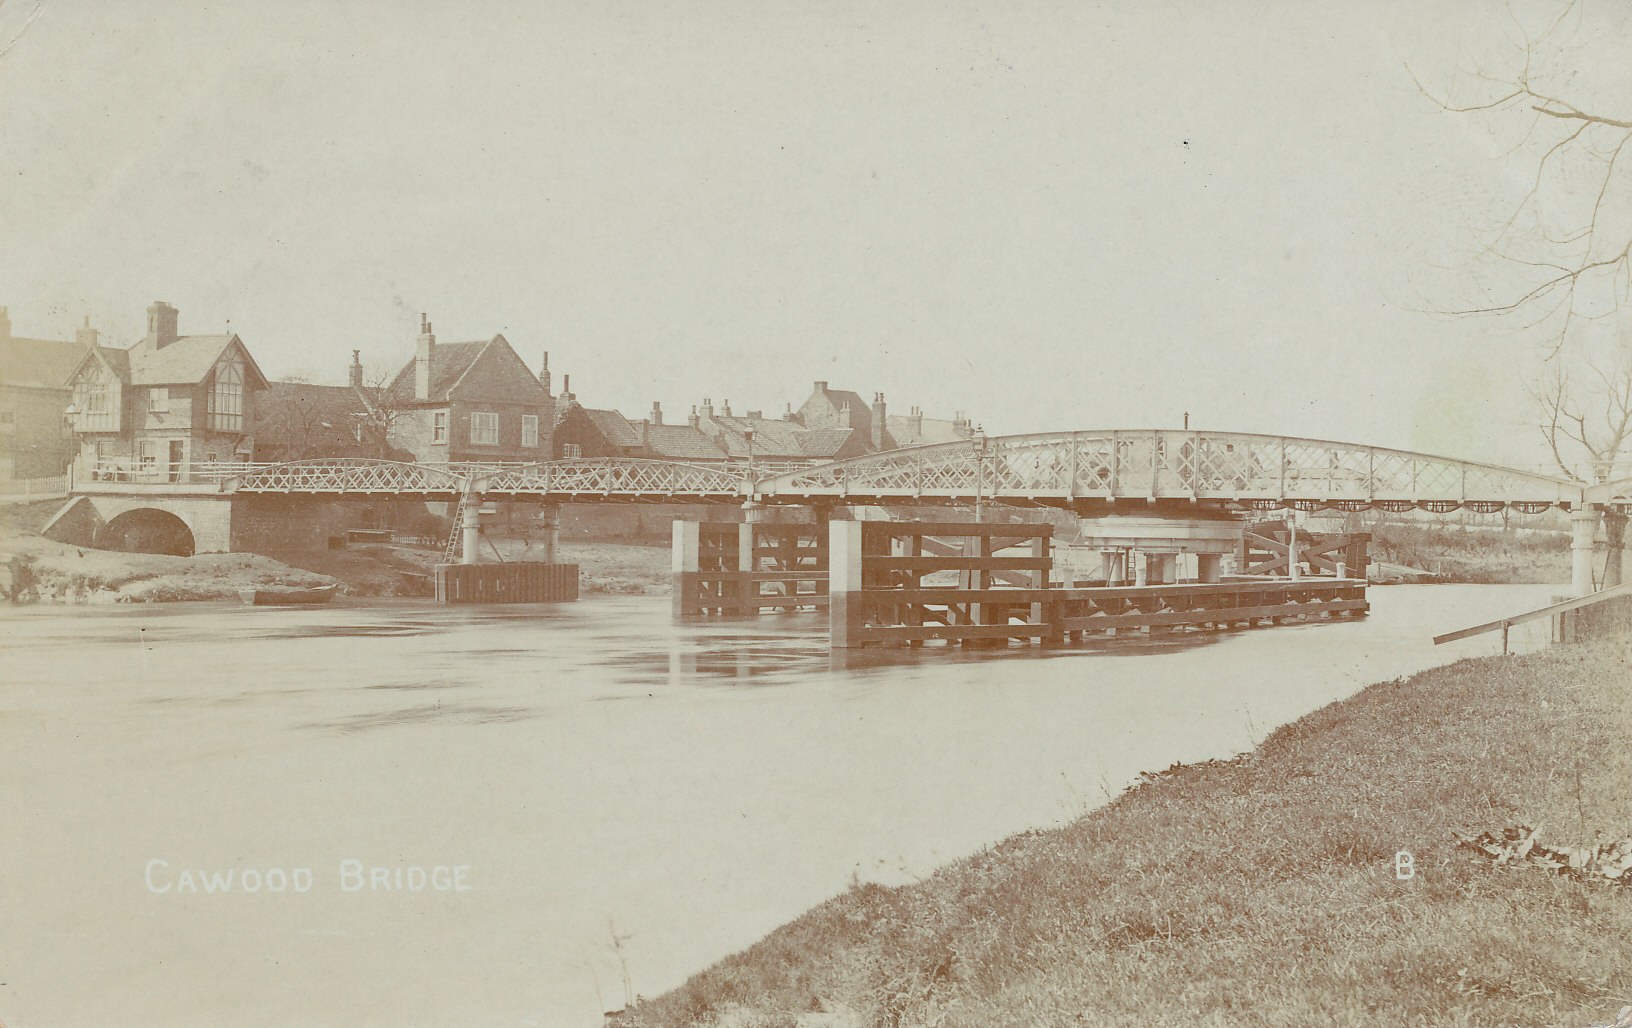 YORKSHIRE, sepia RP, Cawood Bridge, pu in village 1906, a.c.m., G (postcards)